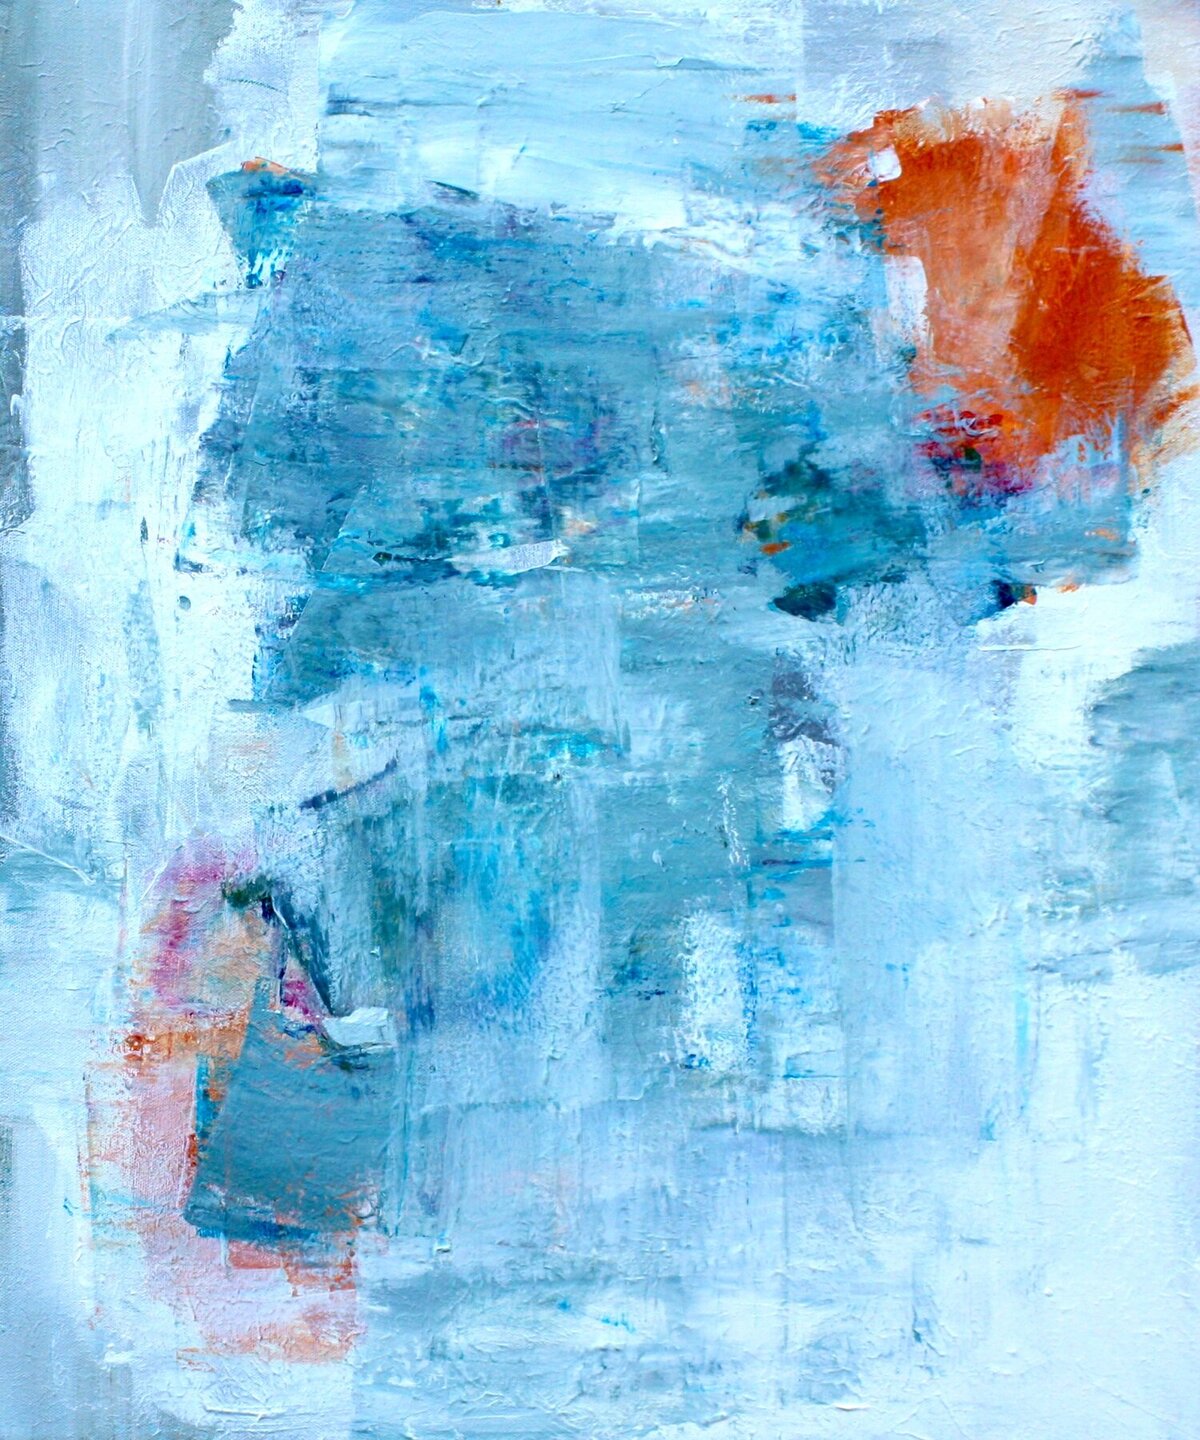 transferance, acrylic on canvas, 18x1x24, 2016